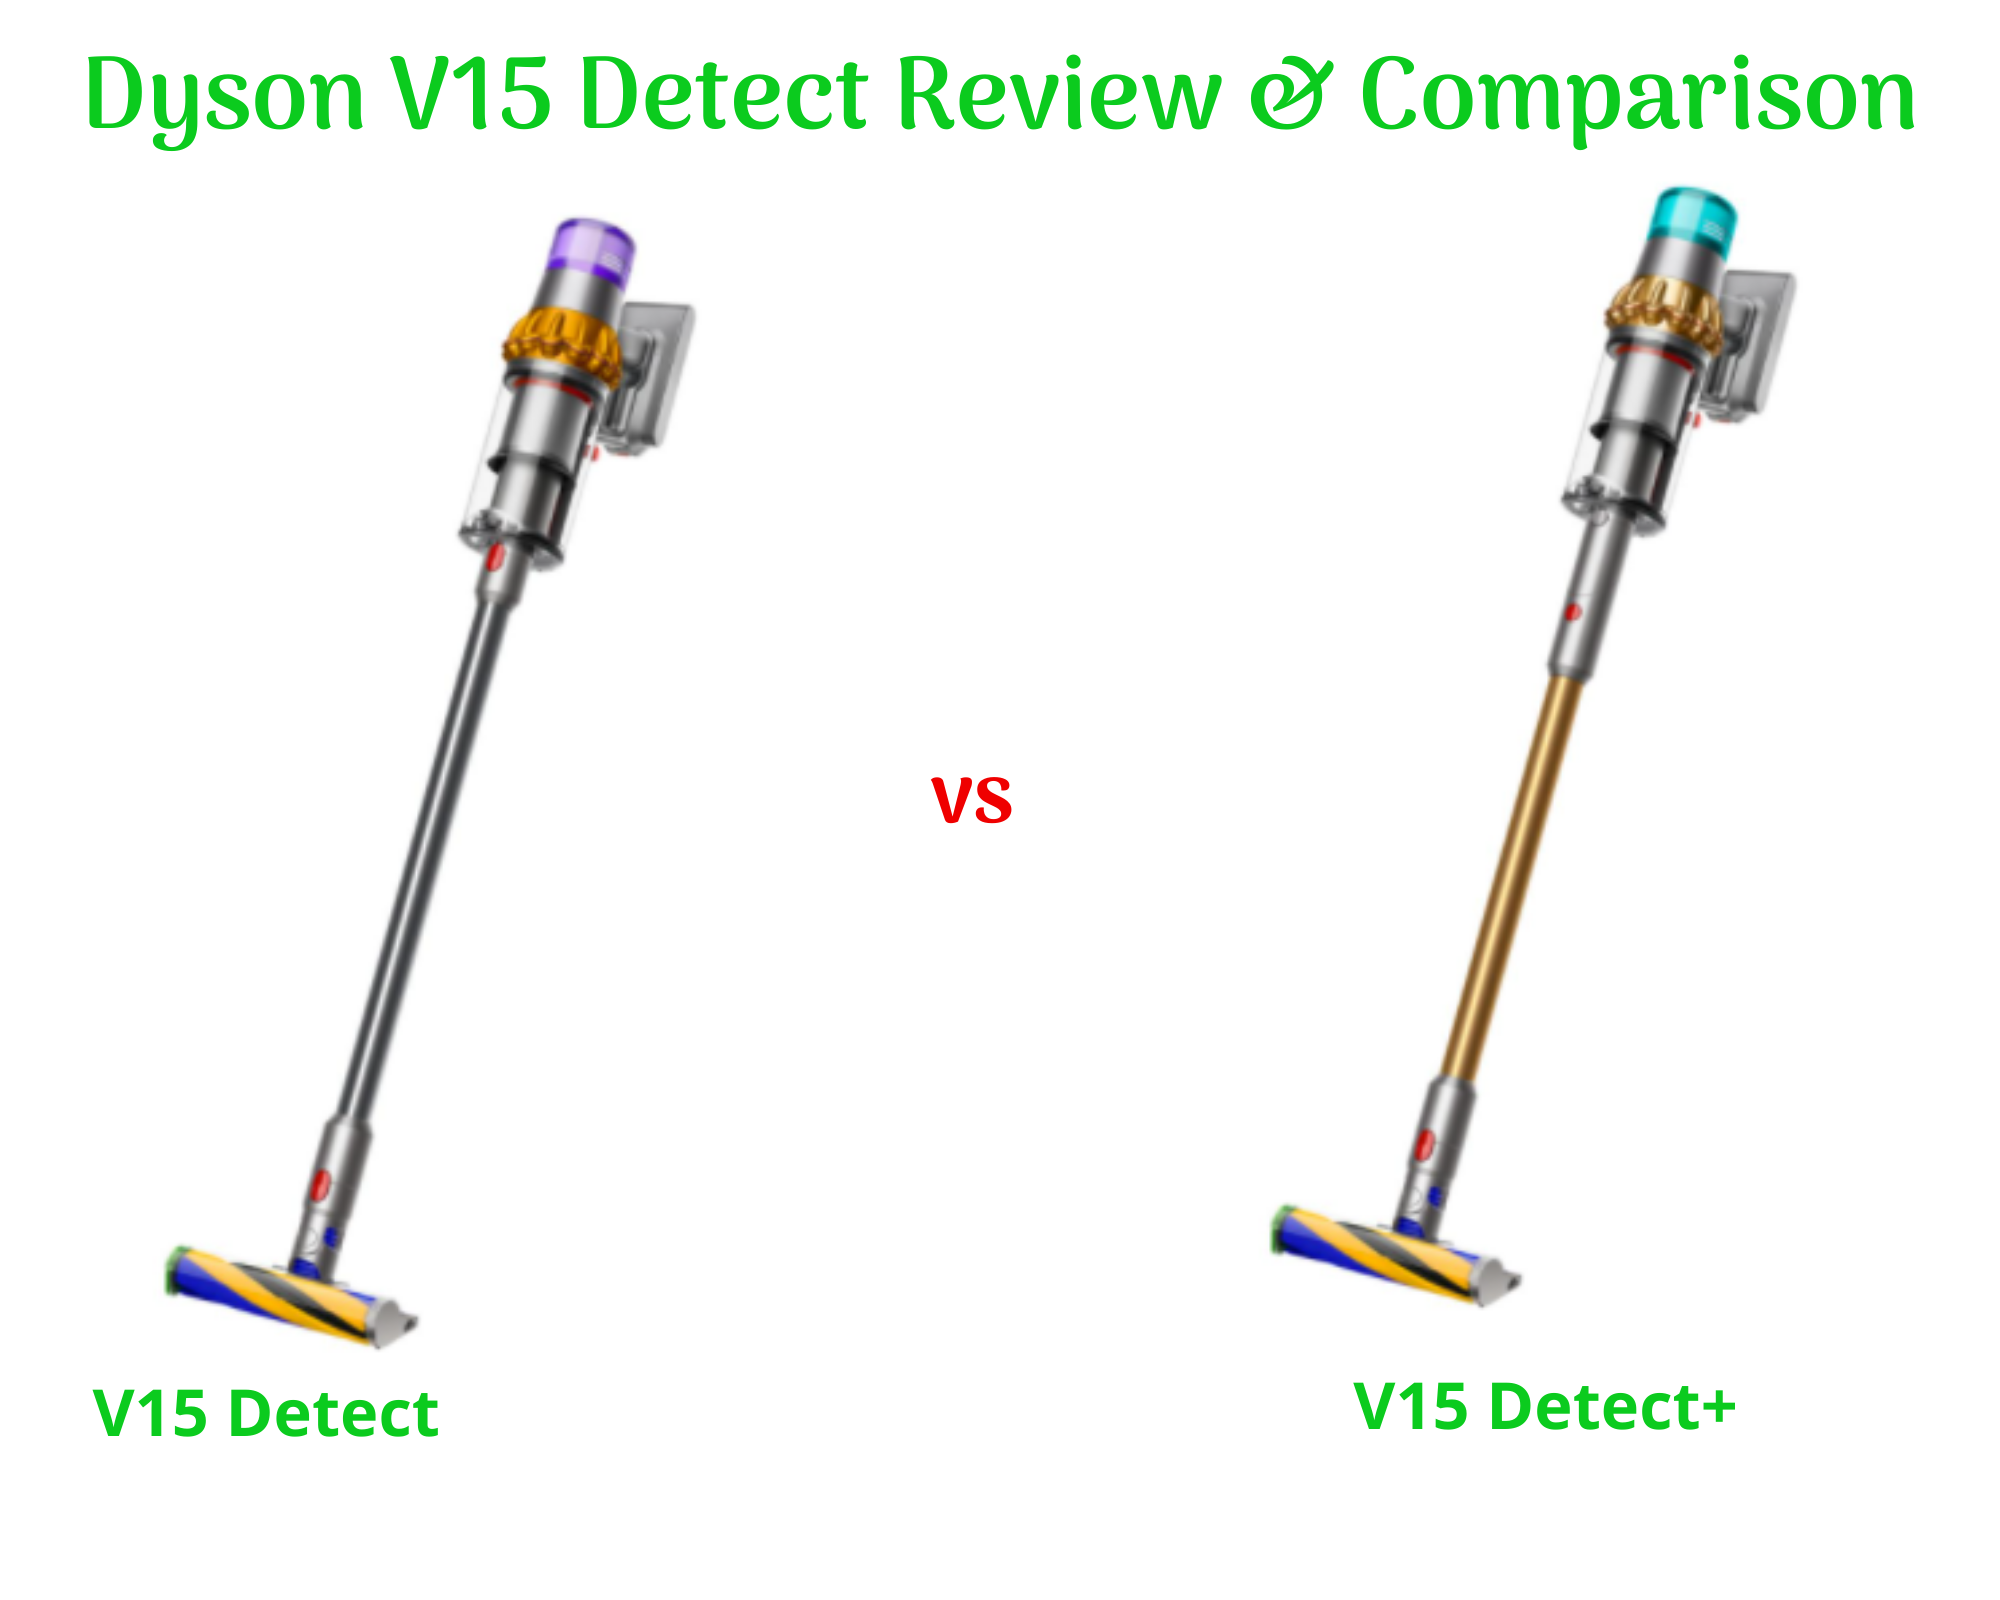 Dyson V15 Detect vs Detect+ Comparison